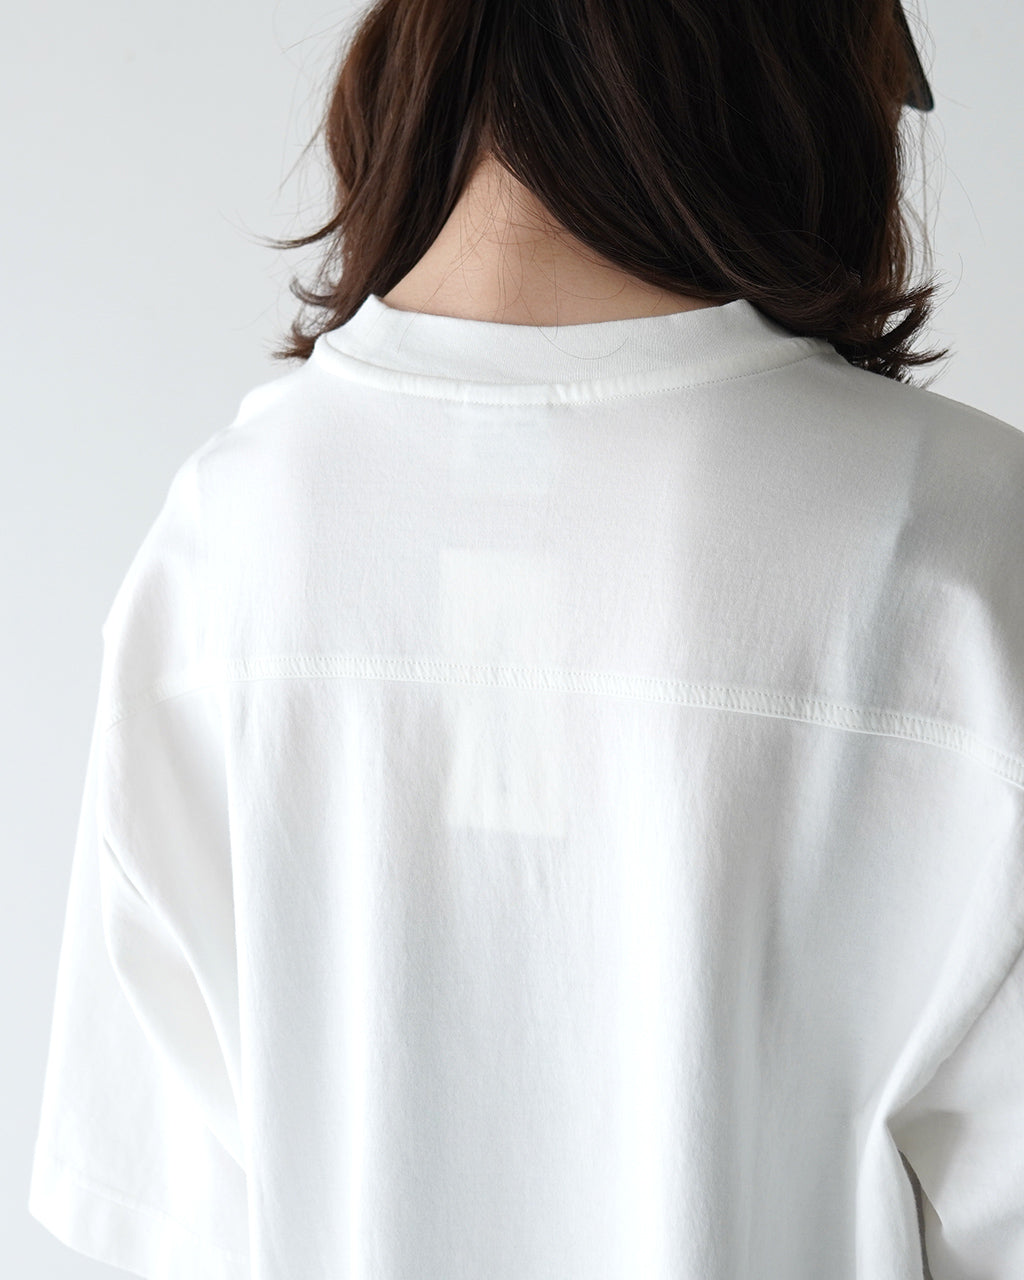 THE SHINZONE シンゾーン スマート Tシャツ SMART TEE SHIRT カットソー   24SMSCU20【送料無料】